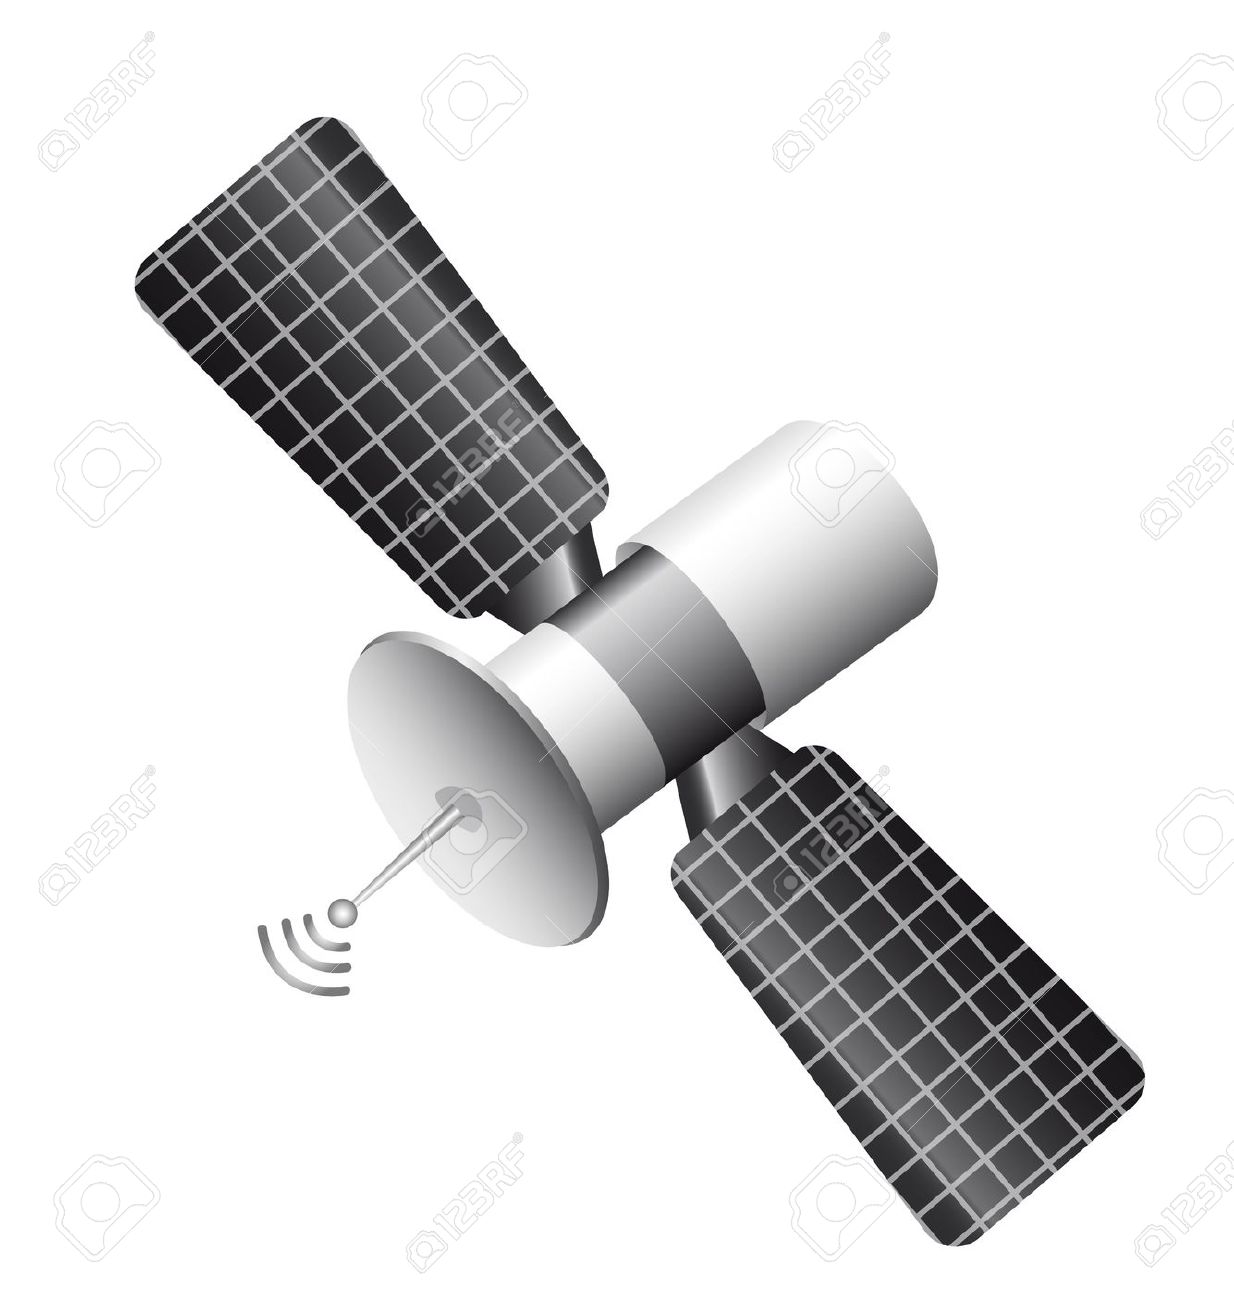 Satellite clipart #11, Download drawings